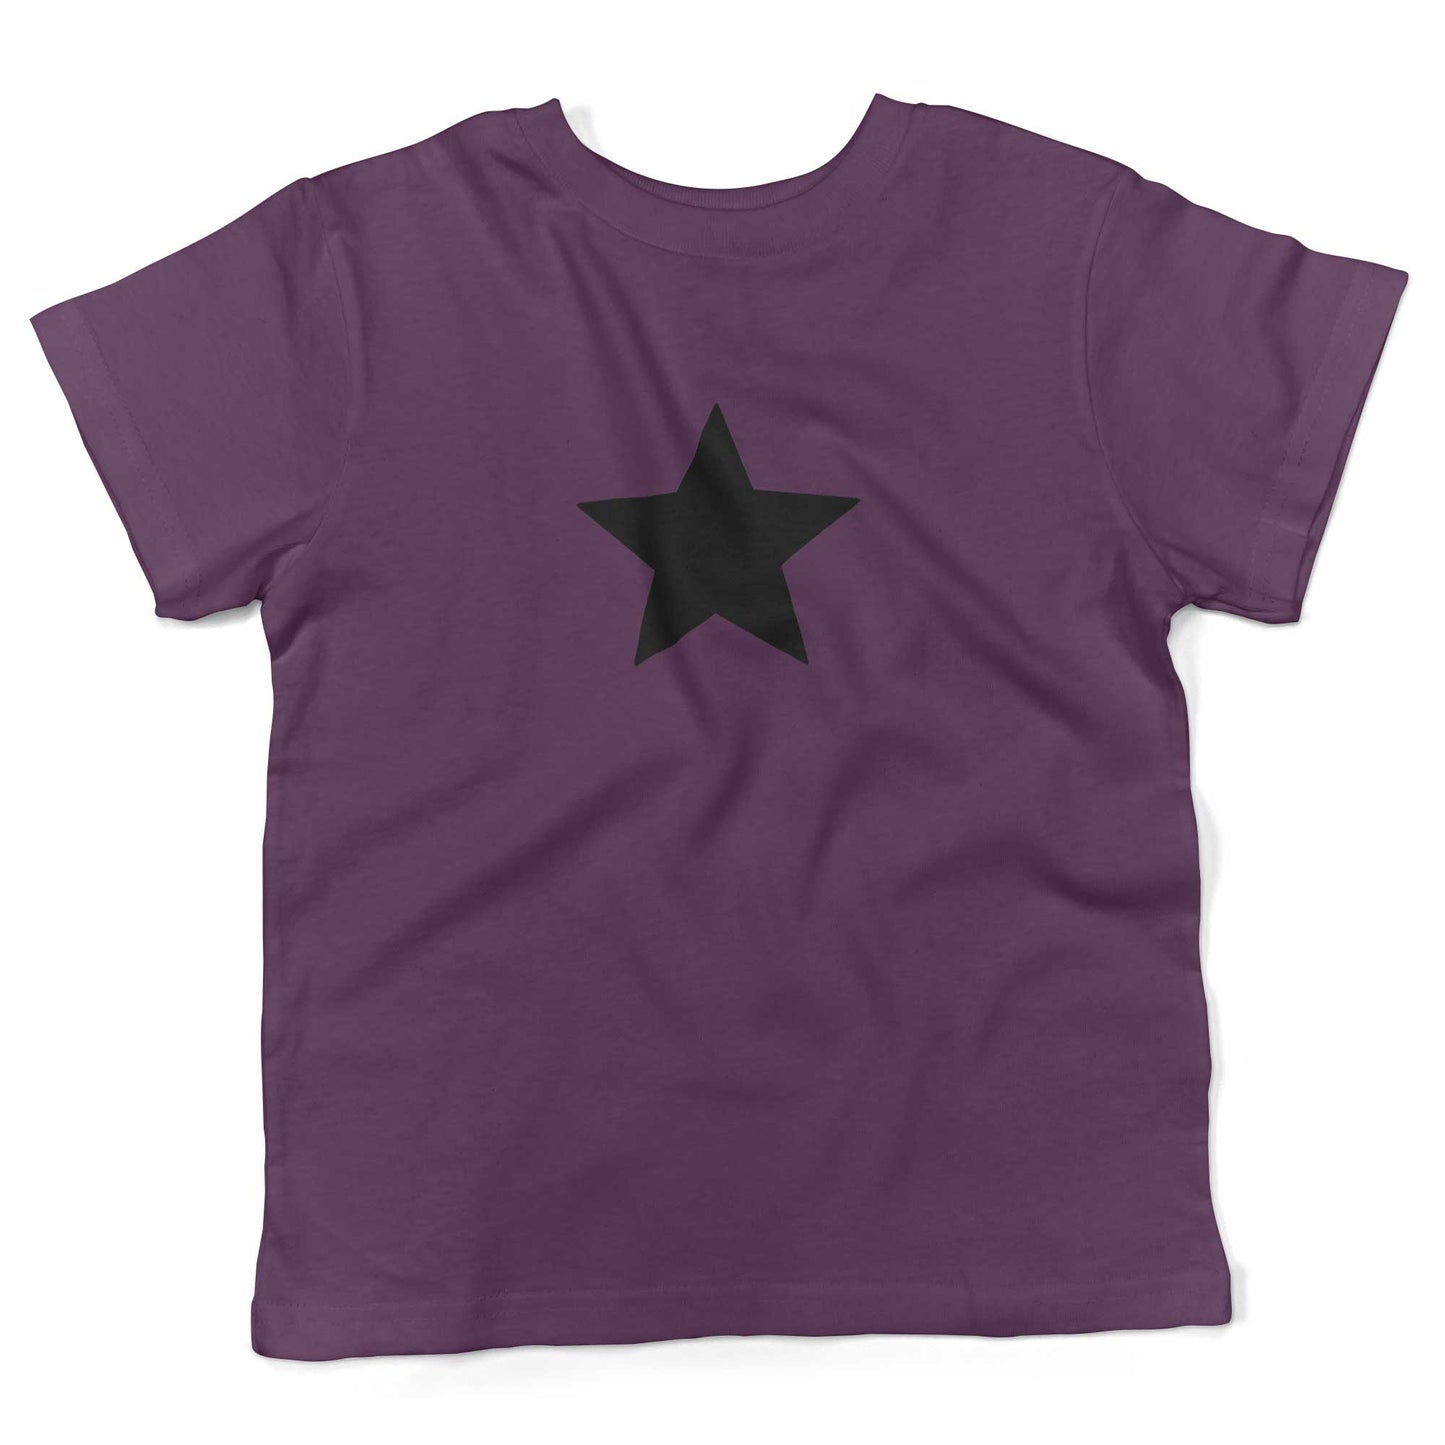 Five-Point Star Toddler Shirt-Organic Purple-Black Star